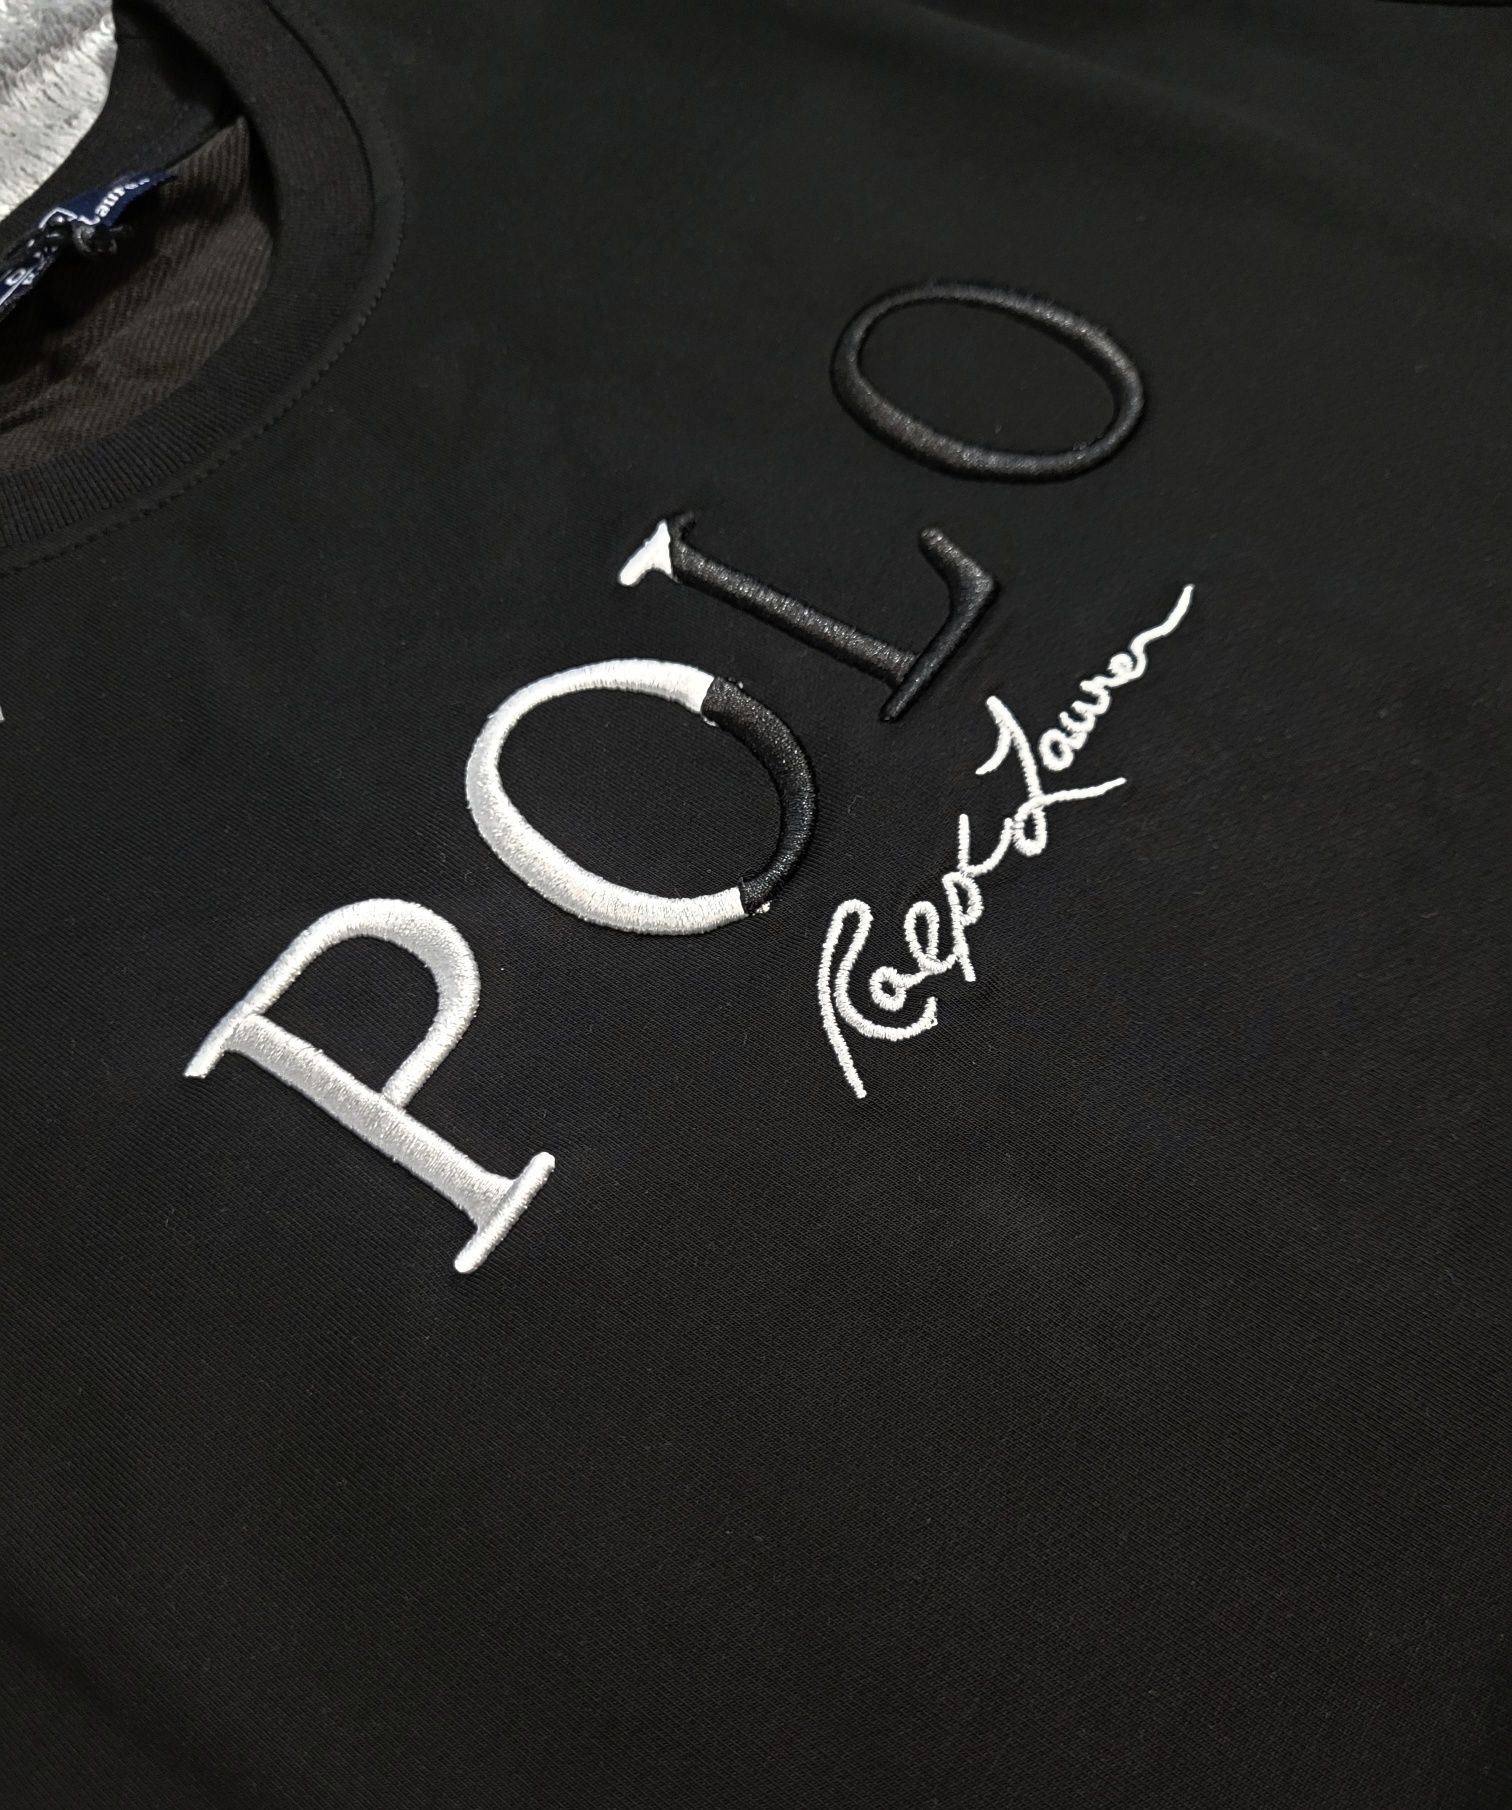 Bluza męska Ralph Lauren Polo XL, XXL